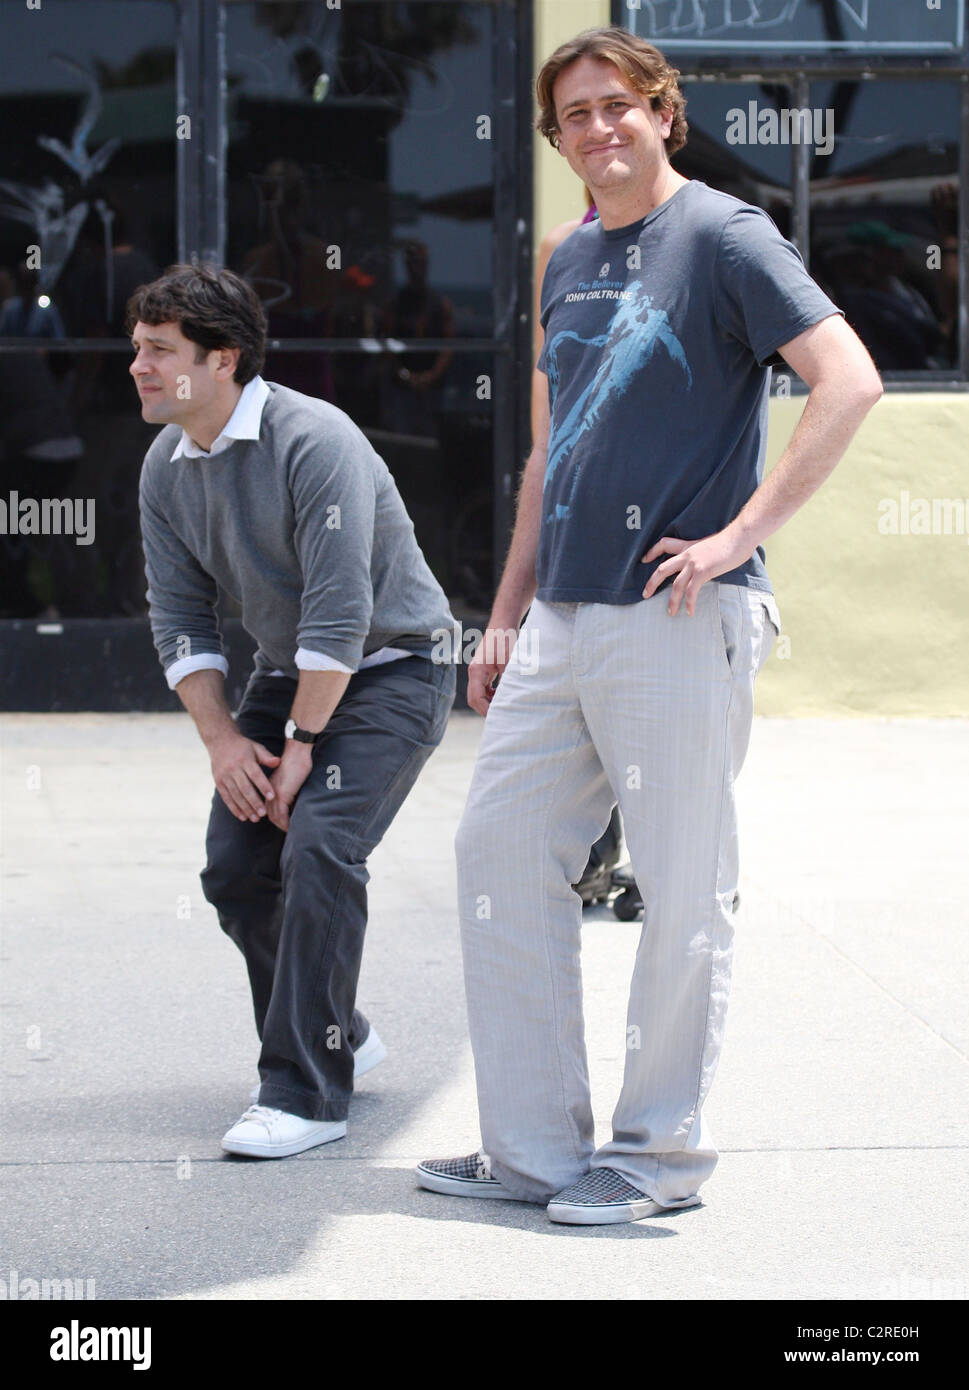 Paul Rudd und Jason Segel am Set des neuen film "I Love You, Man" Los  Angeles, Kalifornien - 28.05.08/Apega/Agent47 Stockfotografie - Alamy